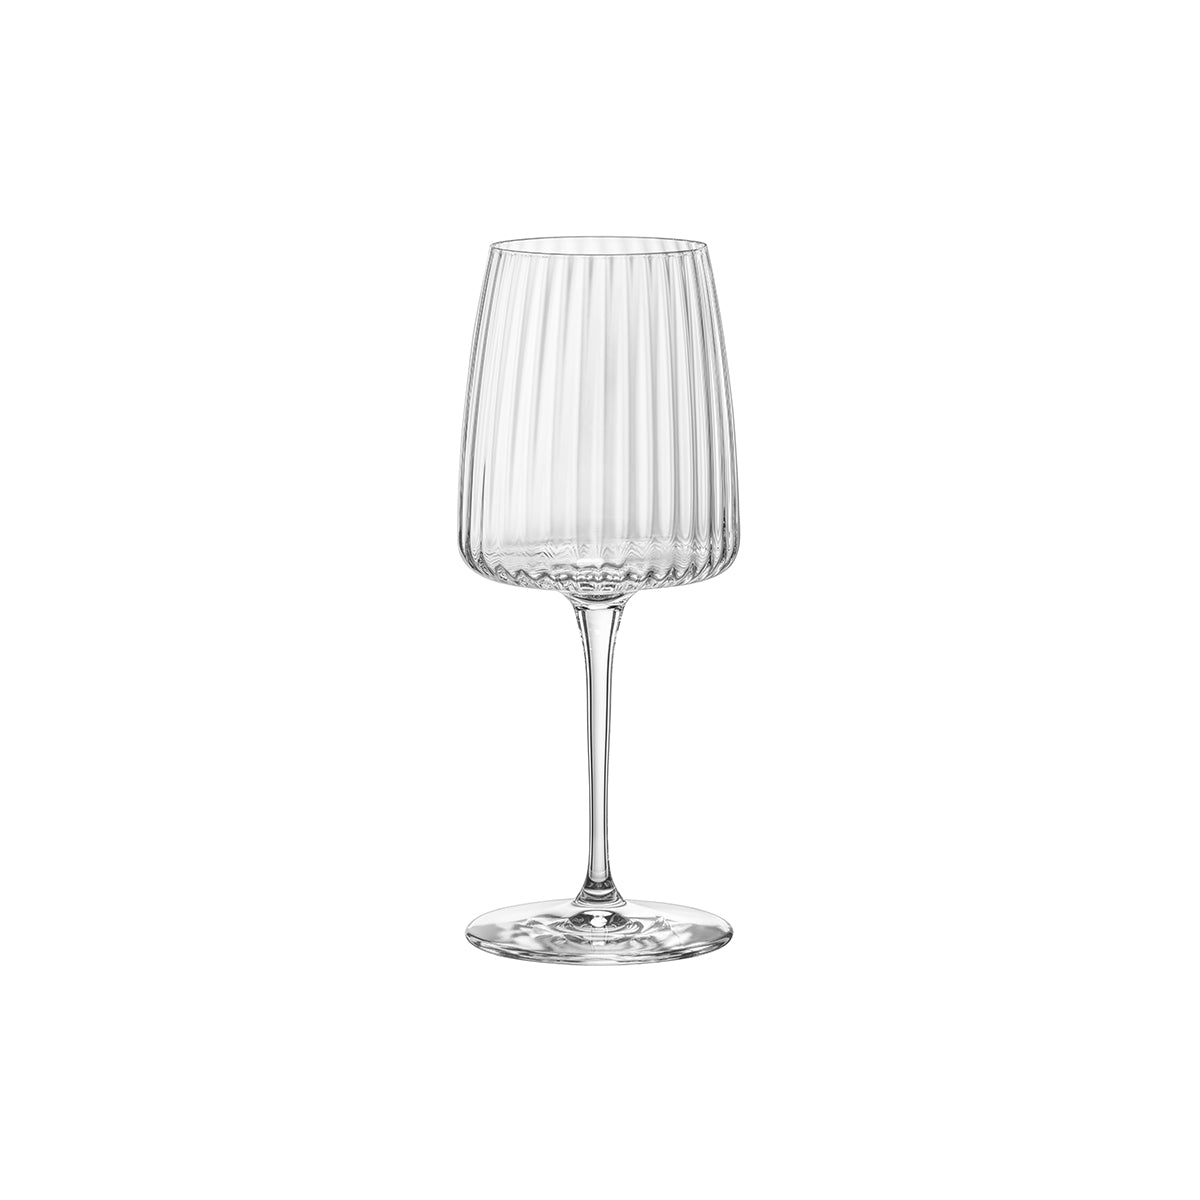 320-205 Bormioli Rocco Exclusiva Chardonnay Wine Glass 374ml Tomkin Australia Hospitality Supplies